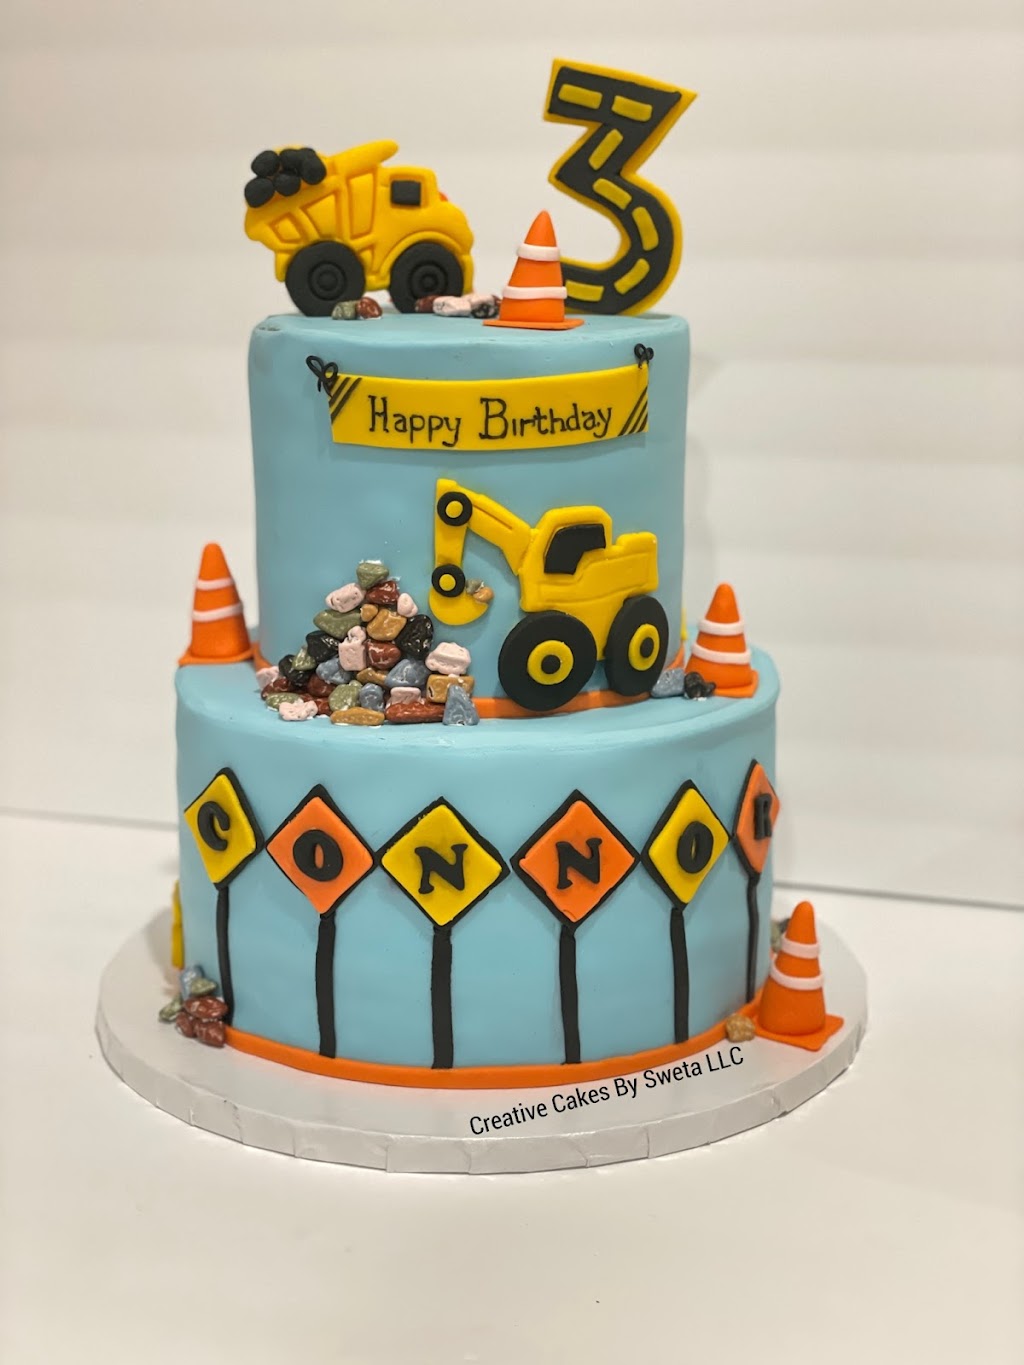 Creative Cakes By Sweta LLC | 200 Cherry Valley Rd, Princeton, NJ 08540 | Phone: (724) 726-1792